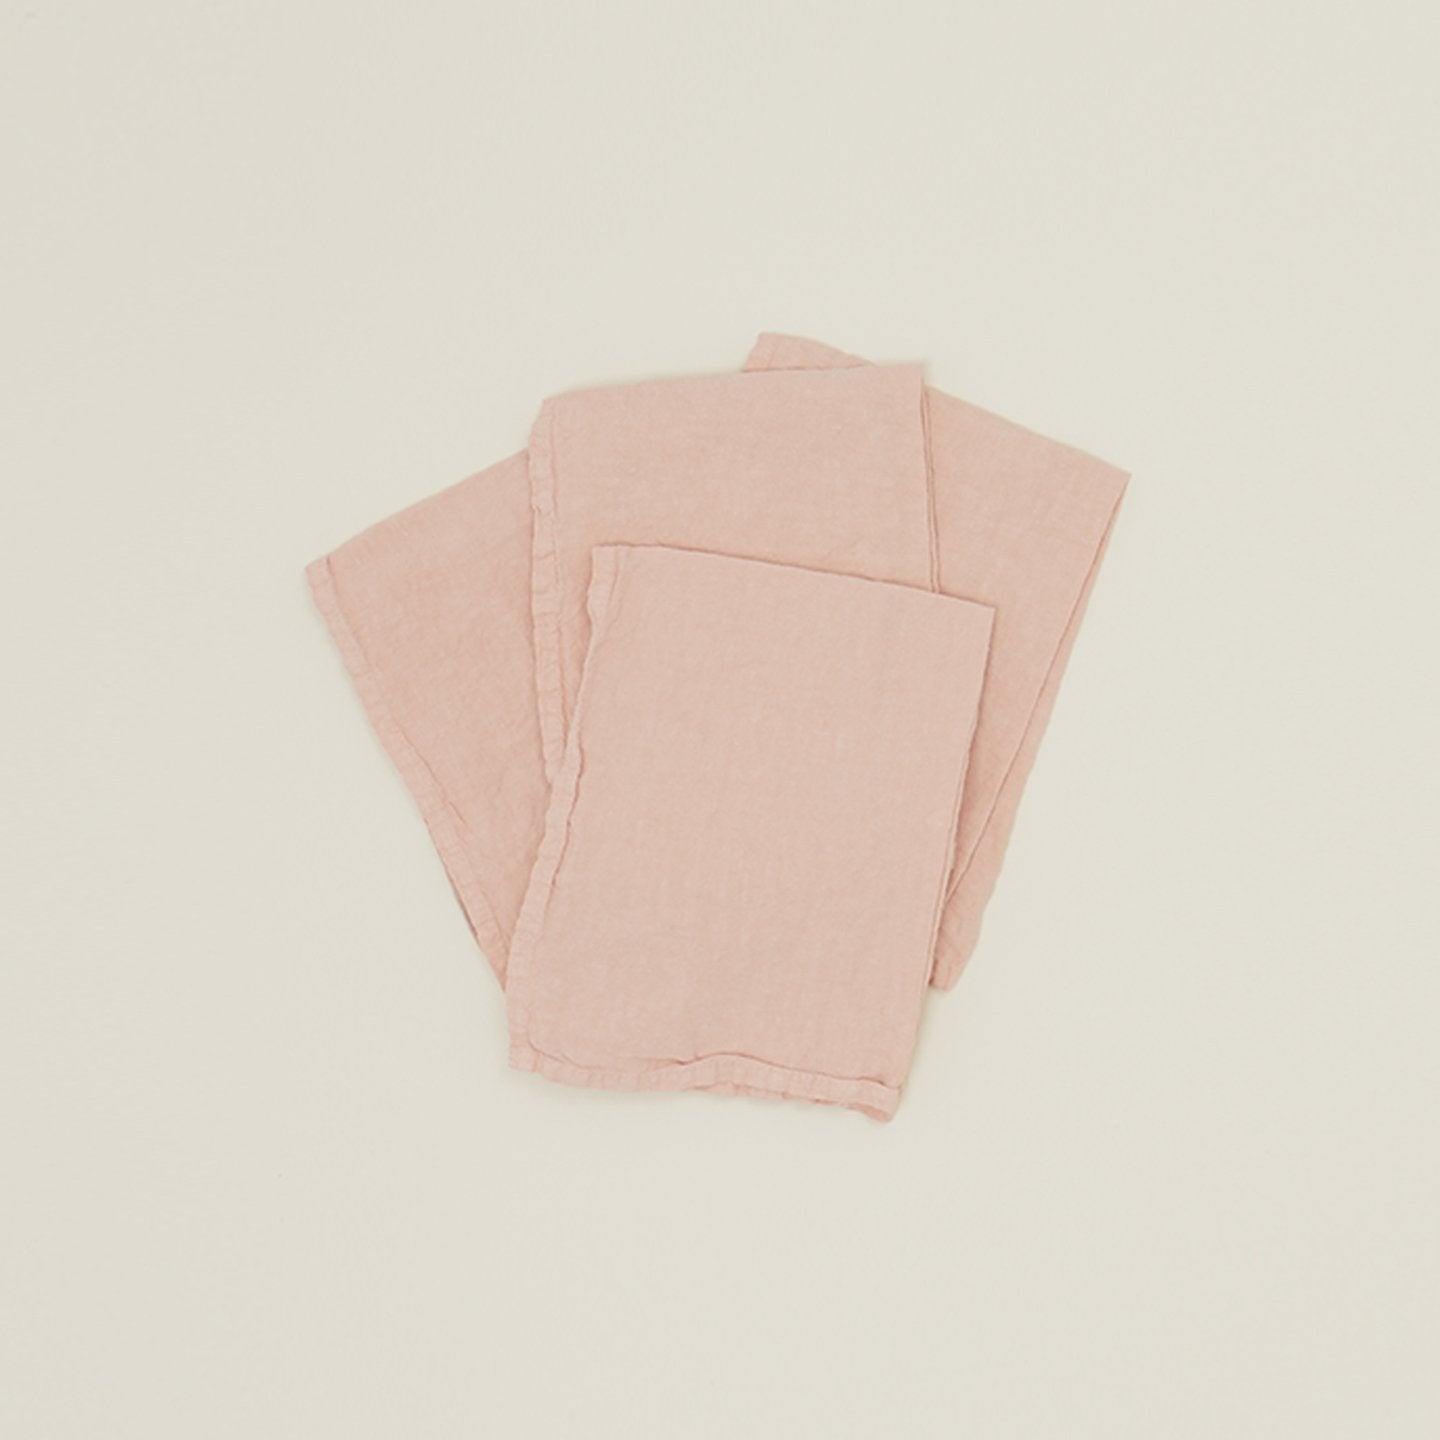 Simple Linen Napkin - Blush